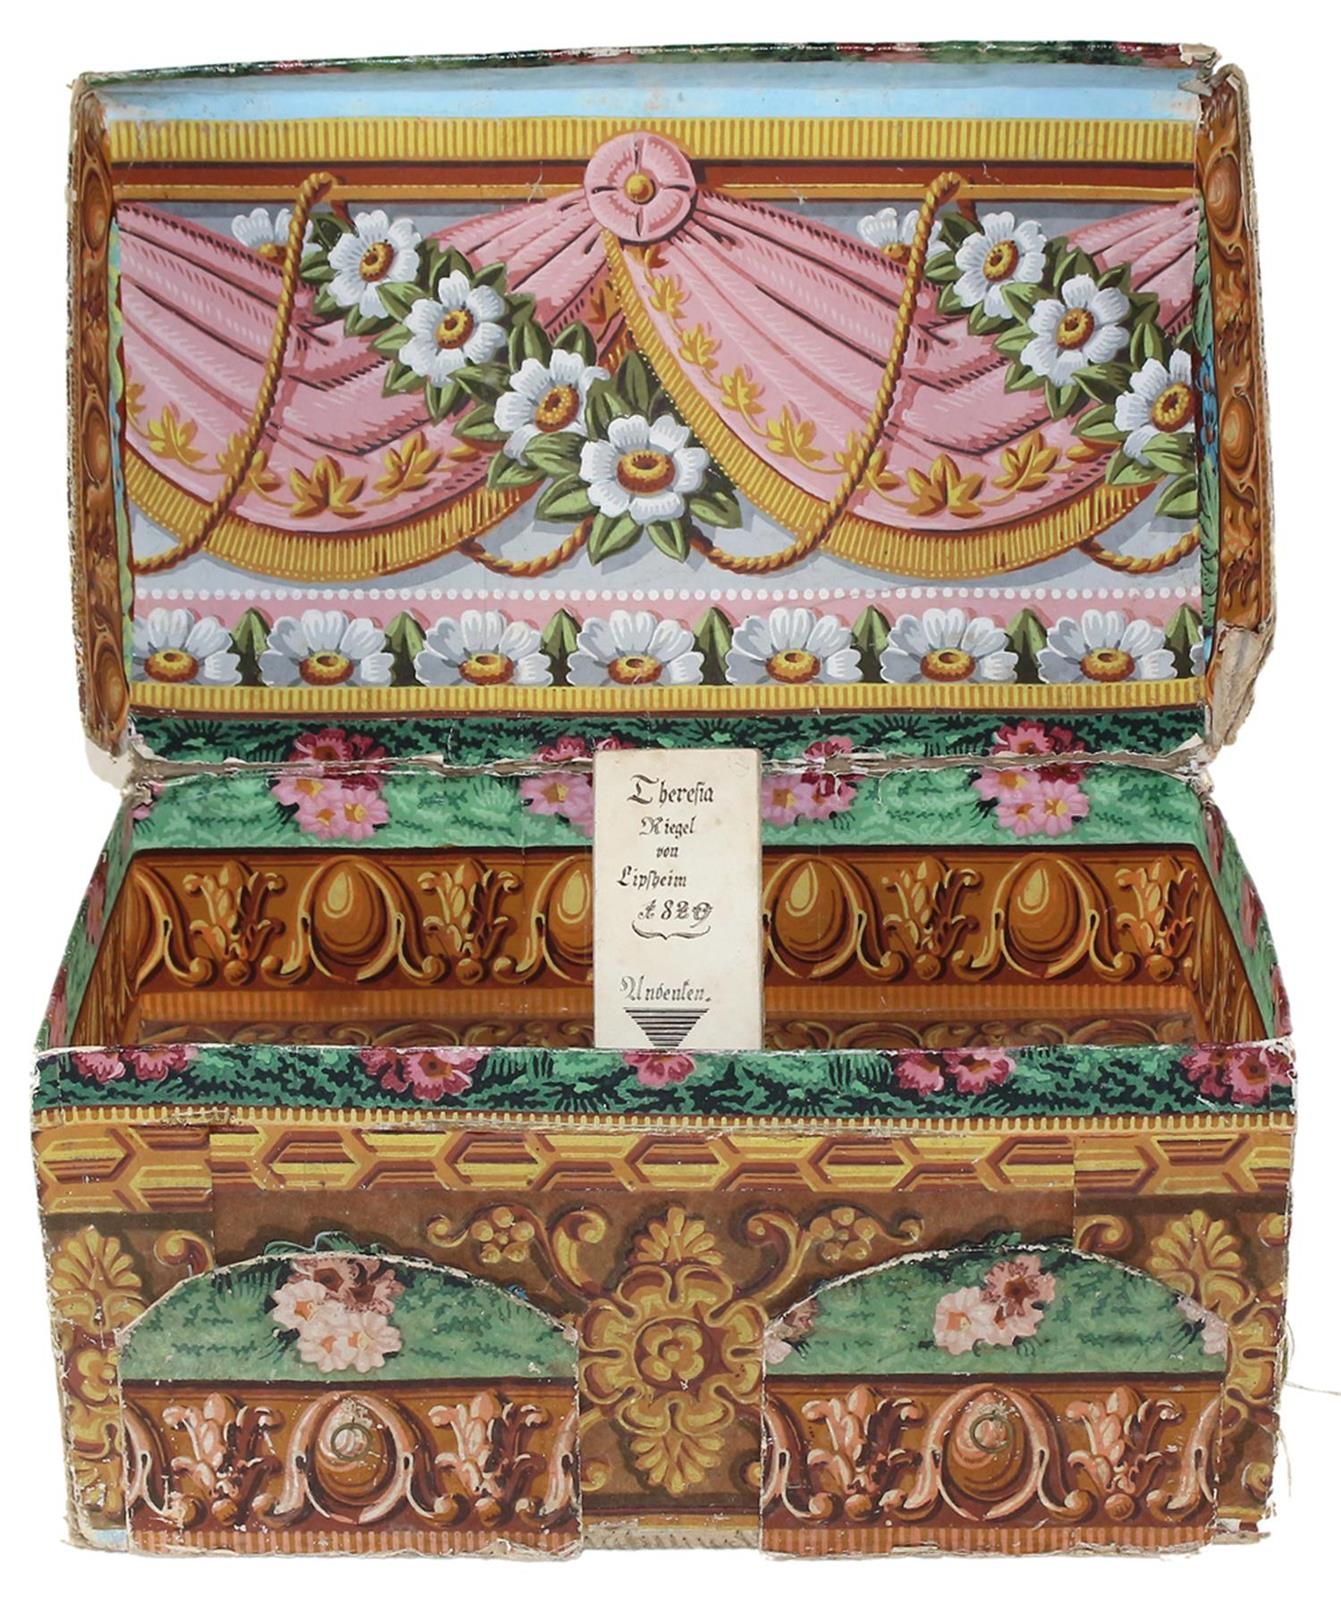 Elsässische Kindertruhe 来自利普斯海姆的特蕾西娅-里格尔的作品，日期为1829年。 纸板箱上覆盖着有花纹装饰的彩色纸（墙纸）。在前面有两&hellip;